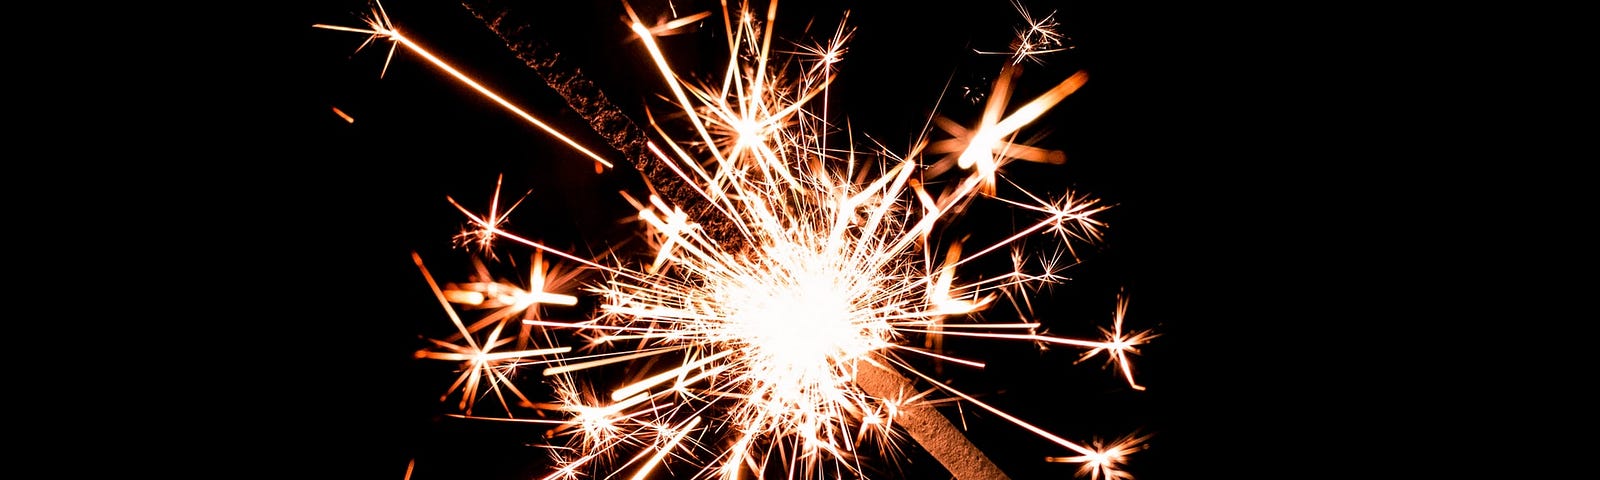 Alt: colour macro photograph of a sparkler burning bright against a dark background. Image credit: Jez Timms | Unsplash